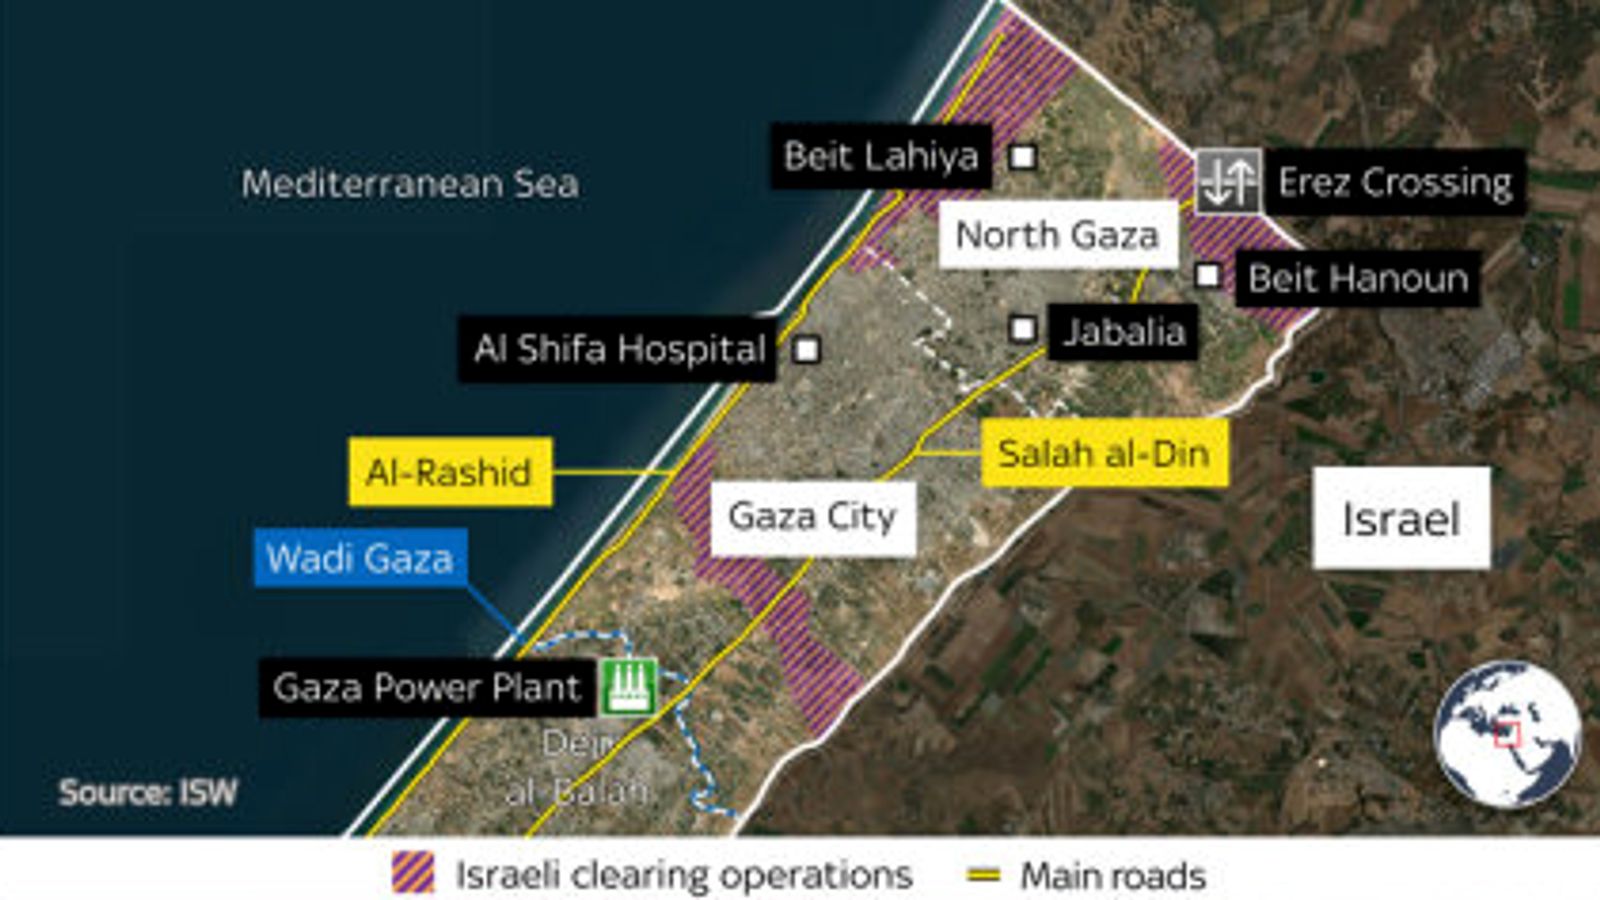 Israel-Hamas conflict: Al Shifa Hospital is a logo of Palestinian ...